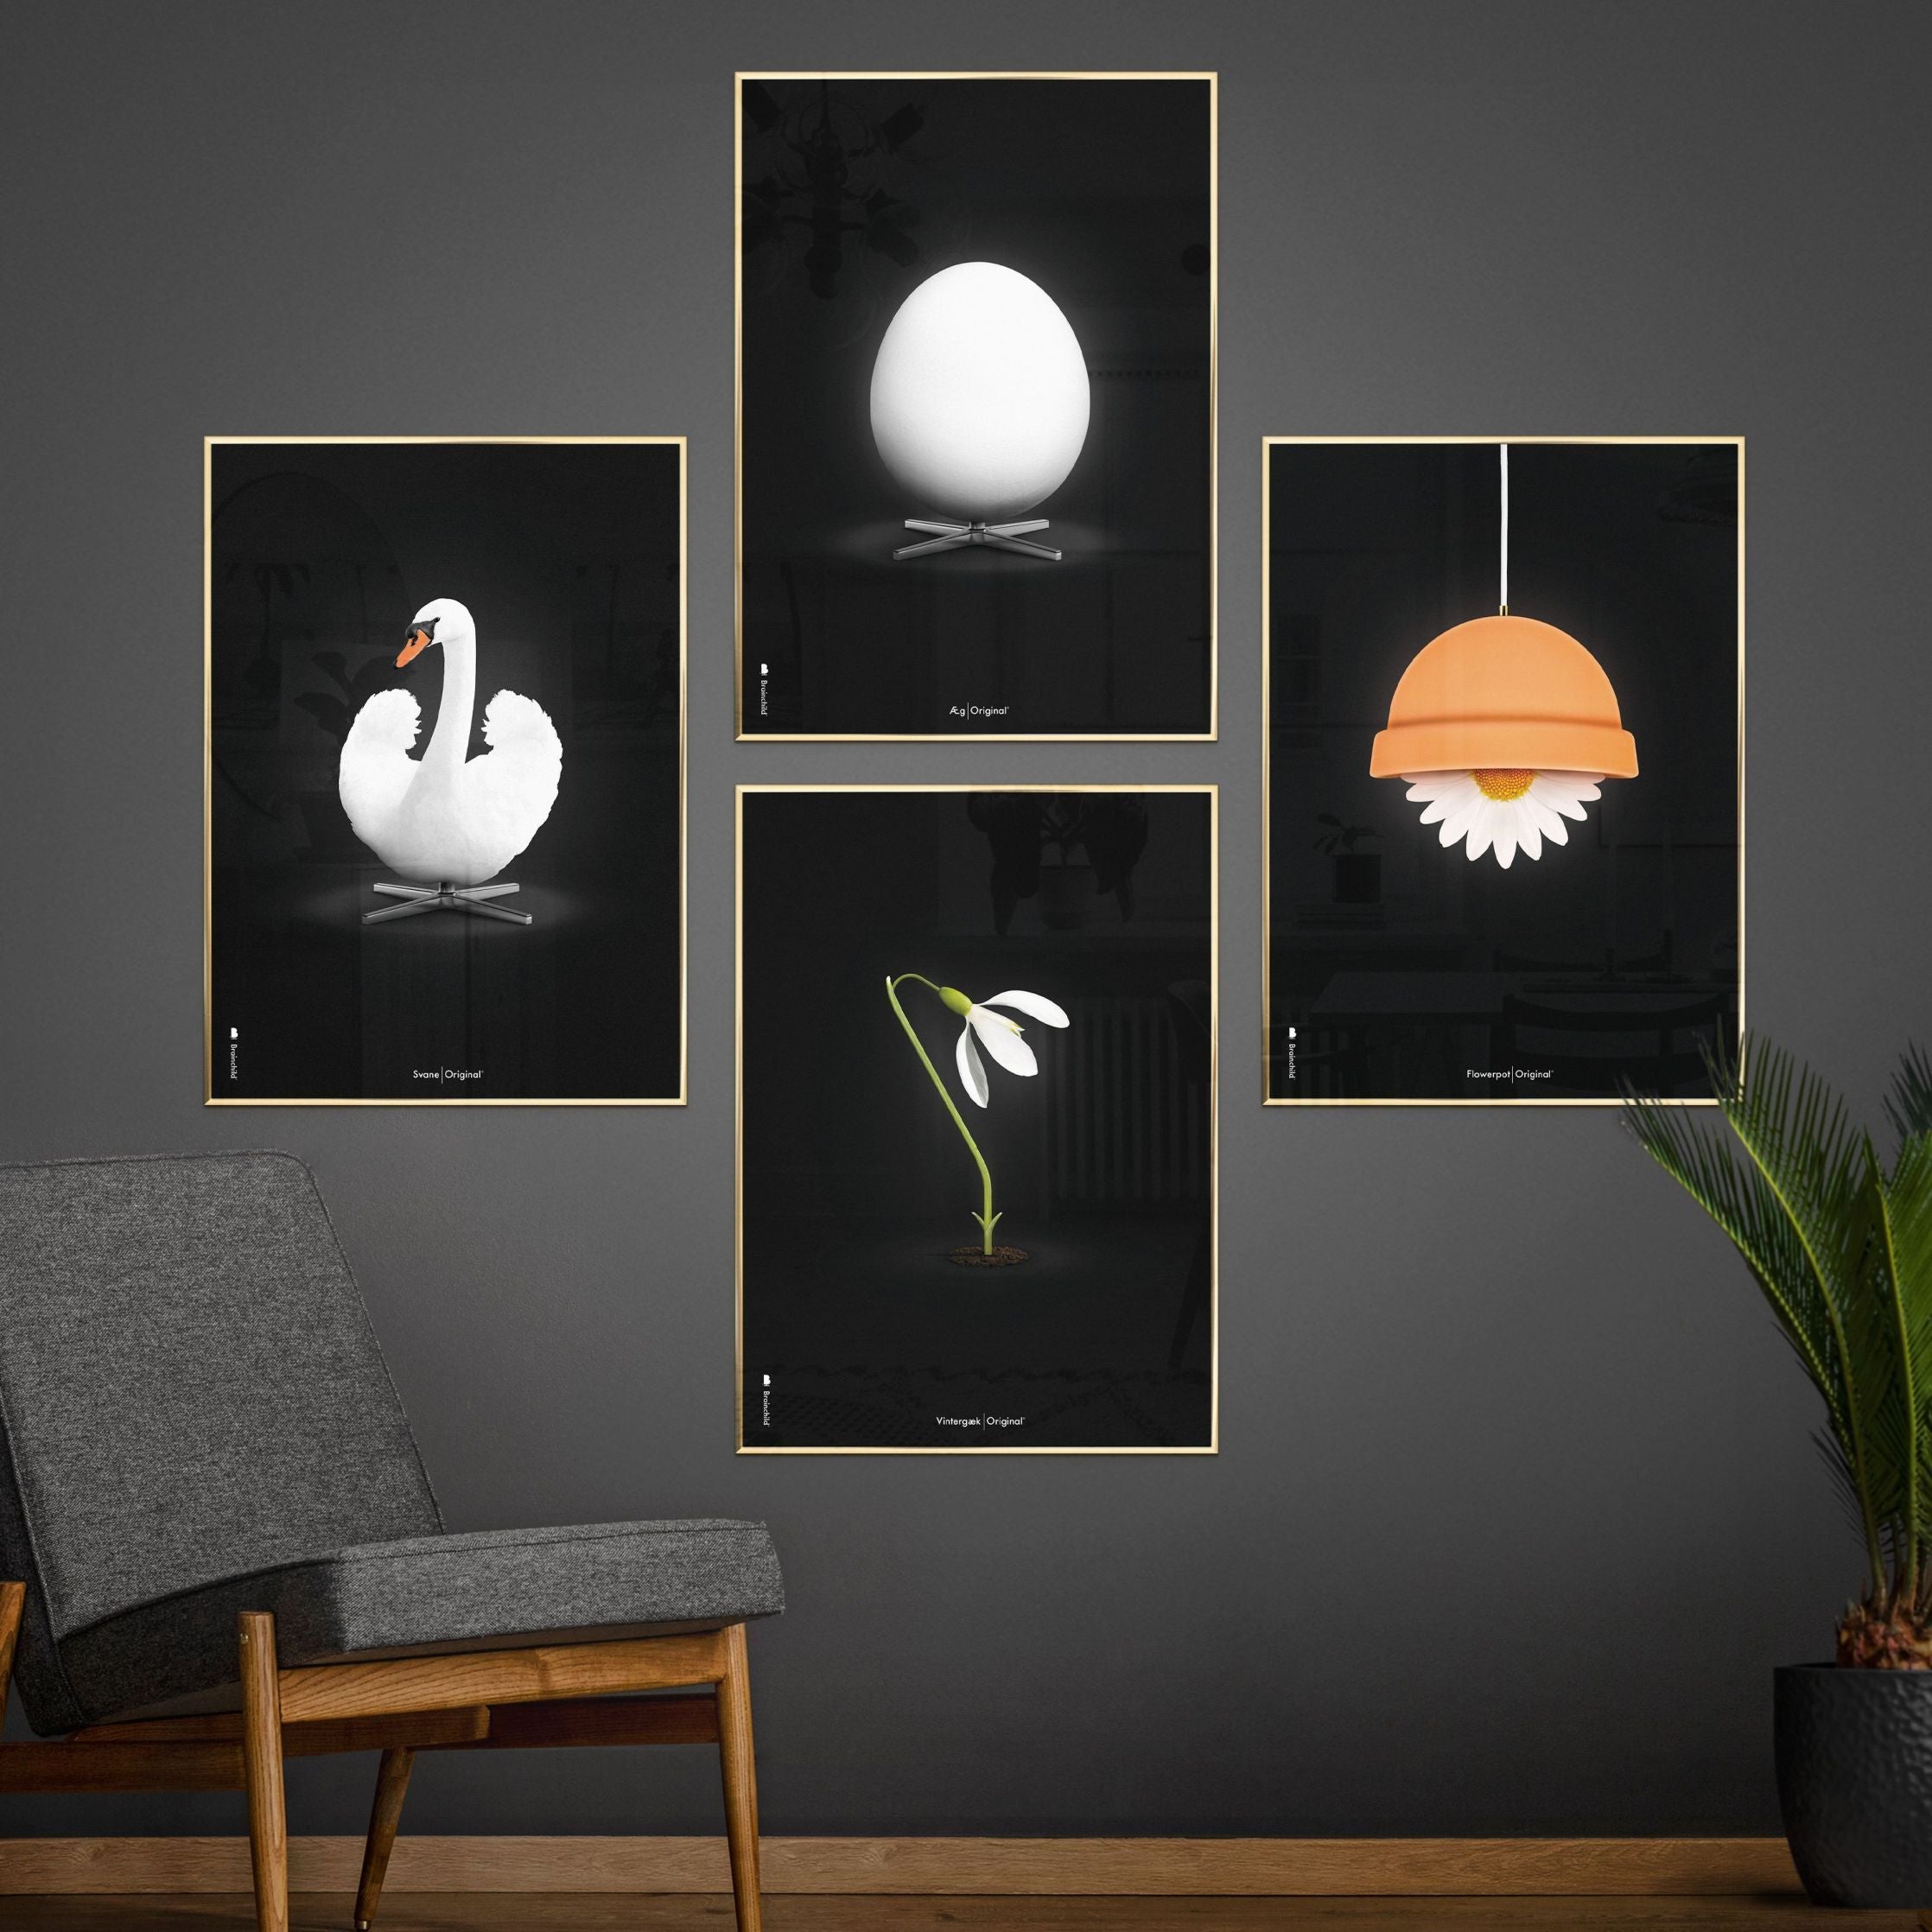 Brainchild Egg Classic Poster, Frame Made Of Light Wood A5, Black Background